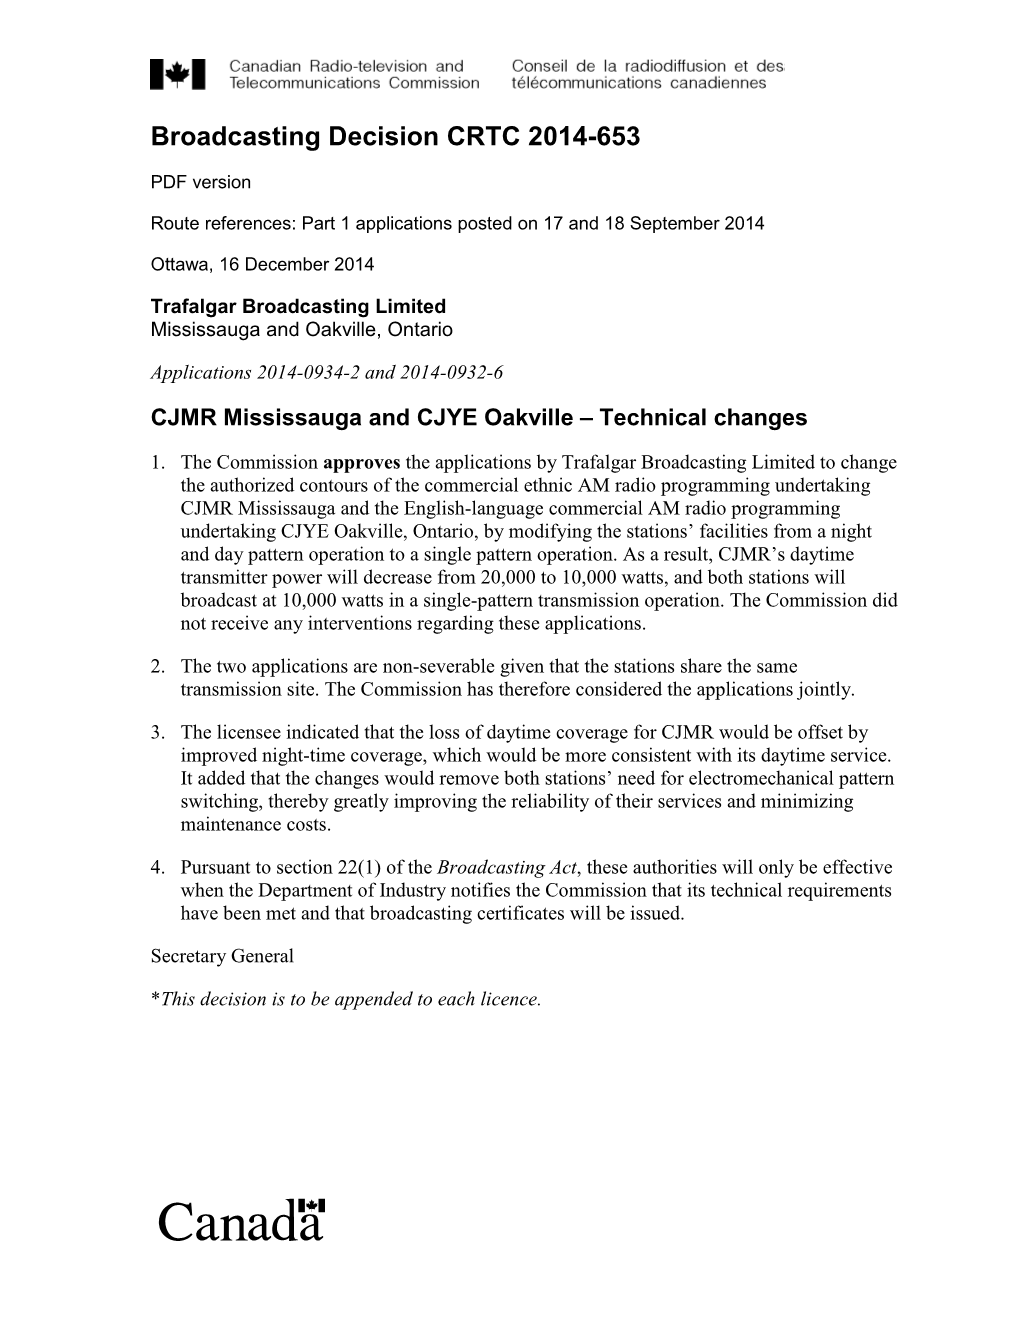 CJMR Mississauga and CJYE Oakville – Technical Changes